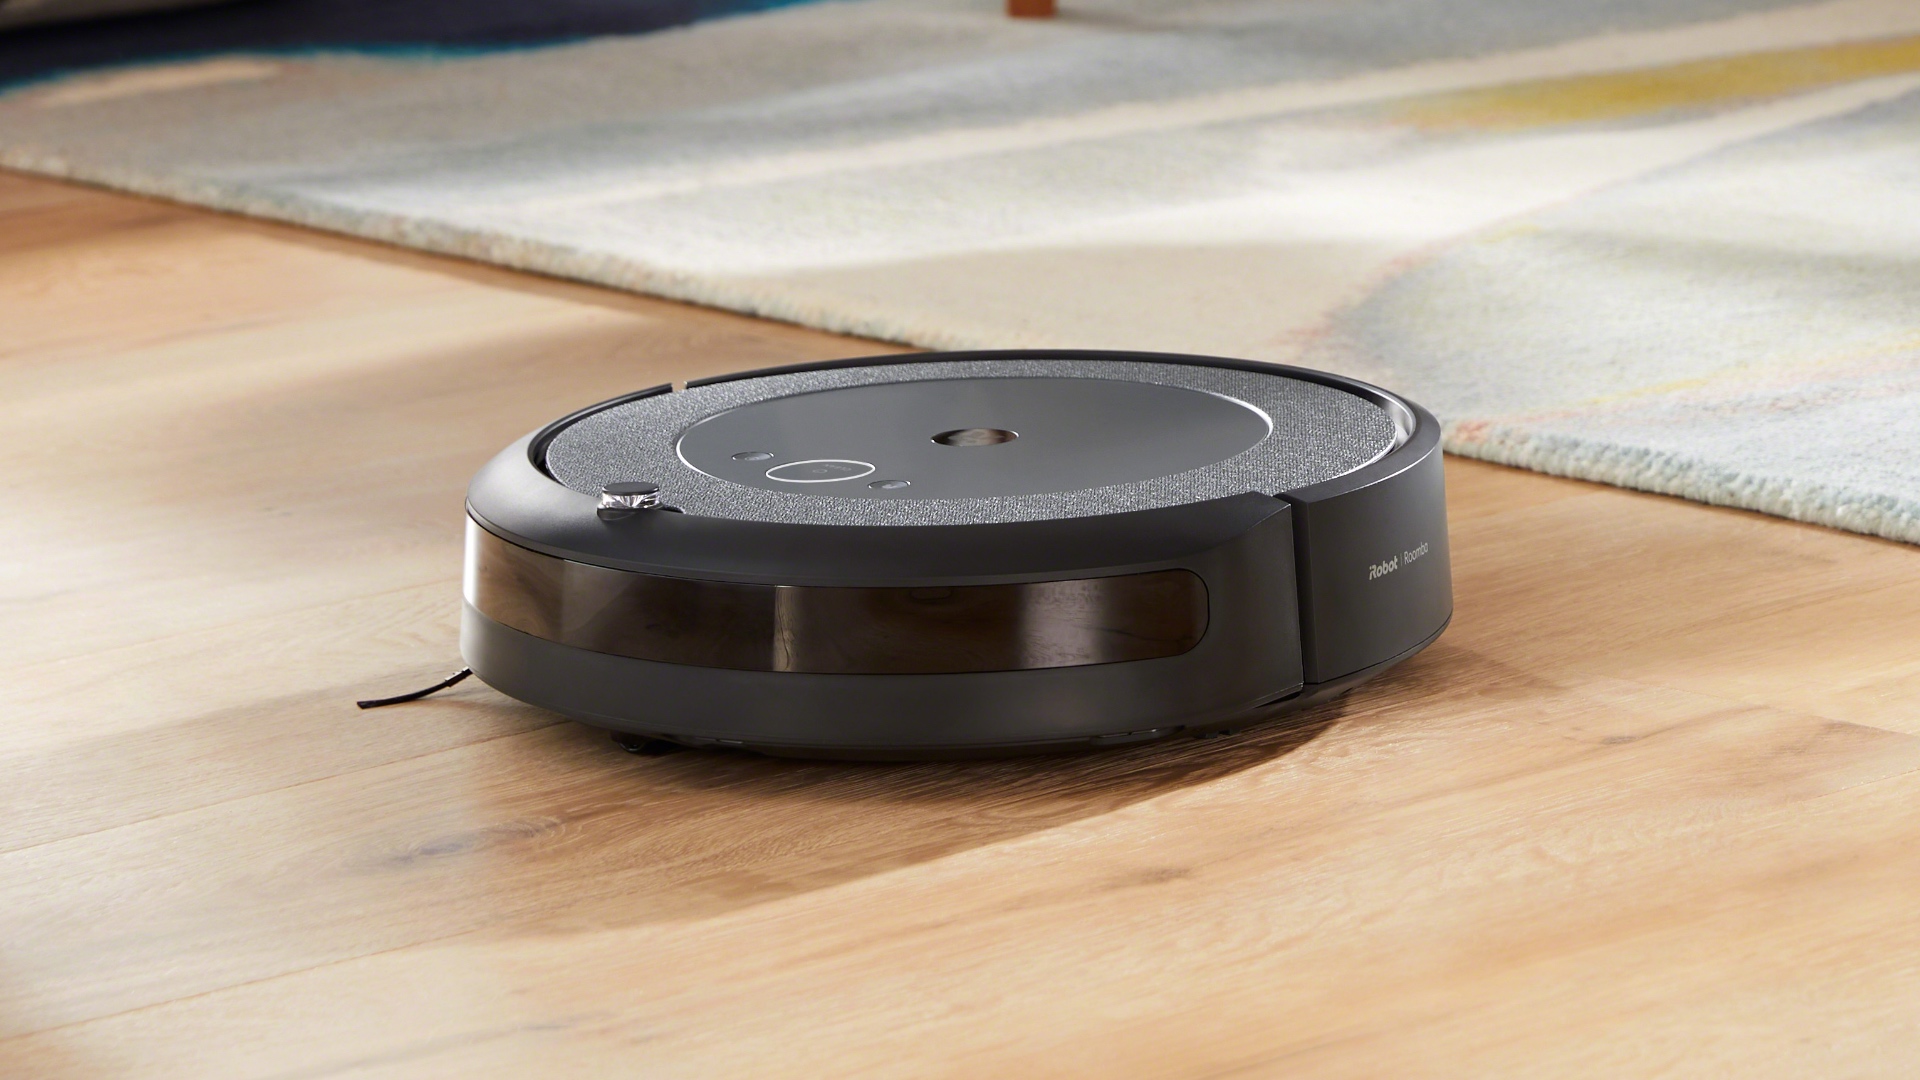 iRobot Roomba i5 Robot aspirateur acheter